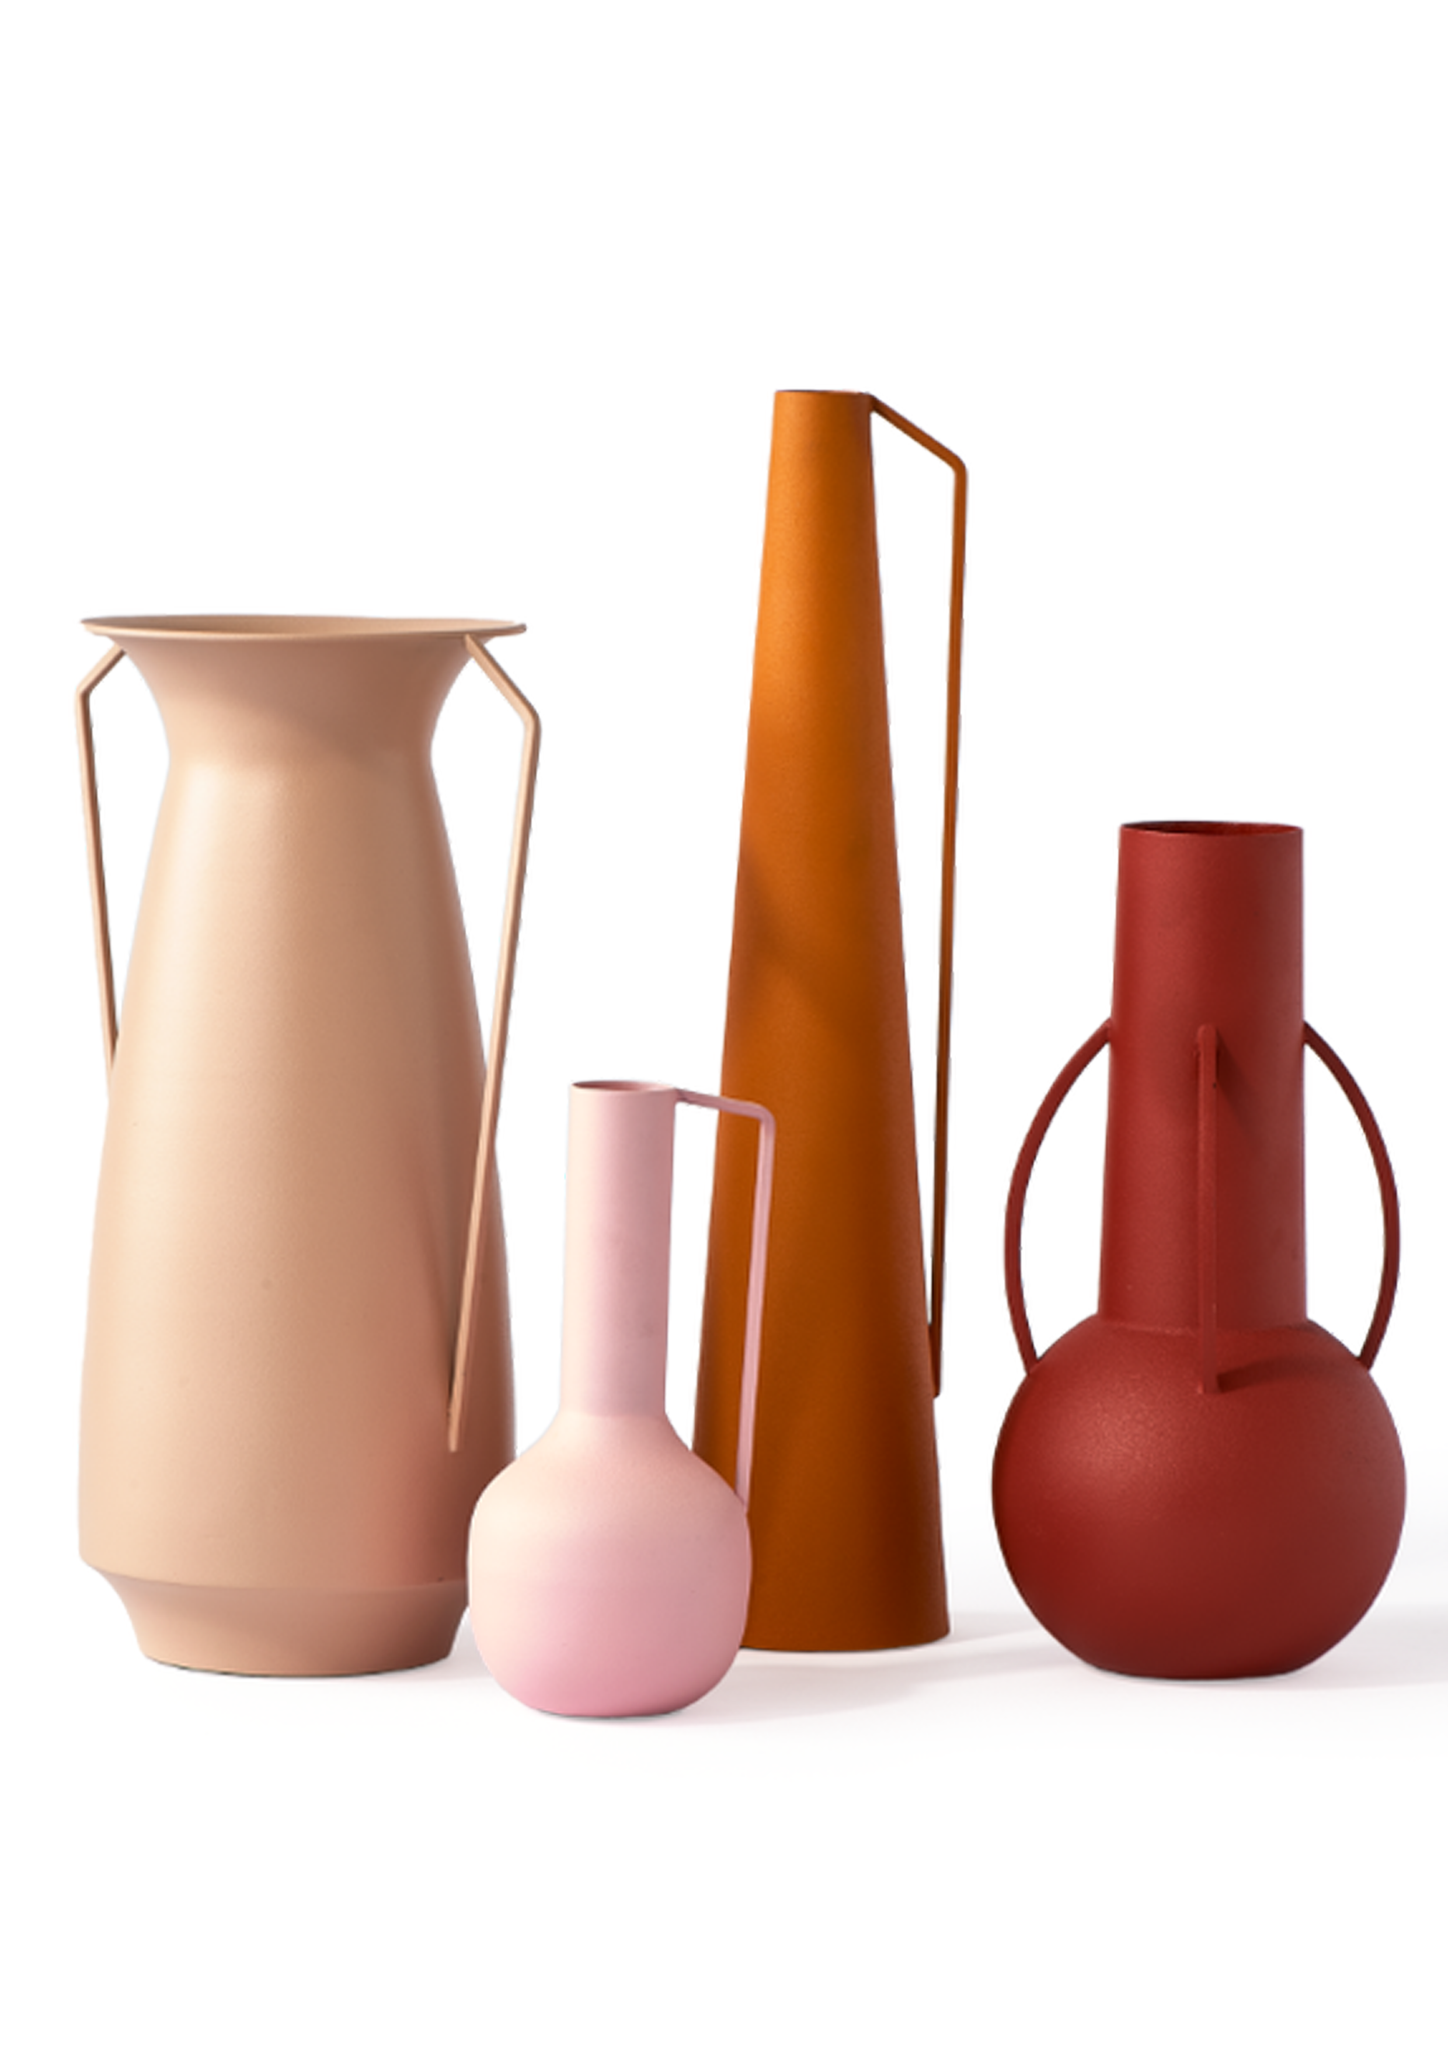 Warm Roman Vase- Available in 4 styles